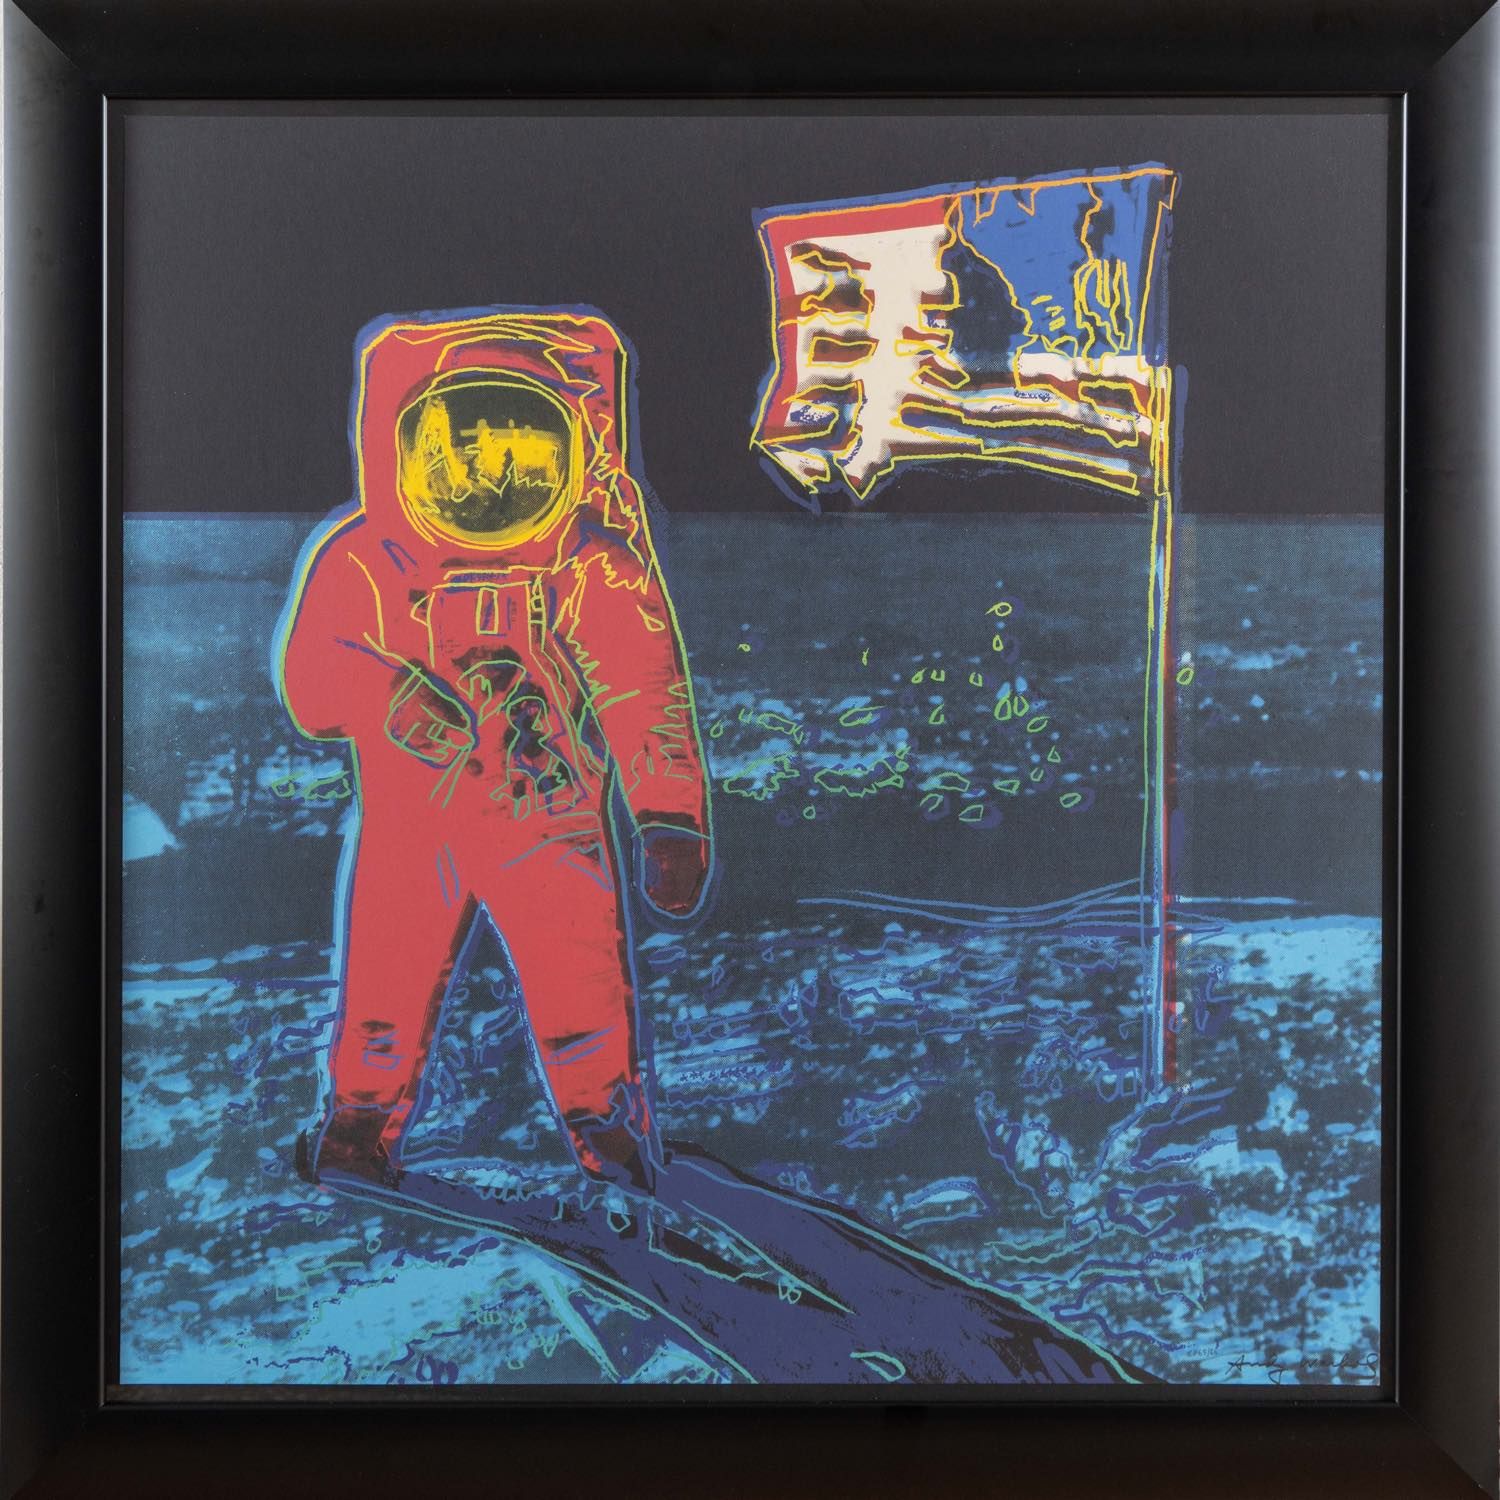 Andy Warhol (Pittsburgh 1928 - New York 1987), “Moonwalk”, 1987. Sérigraphie cou&hellip;